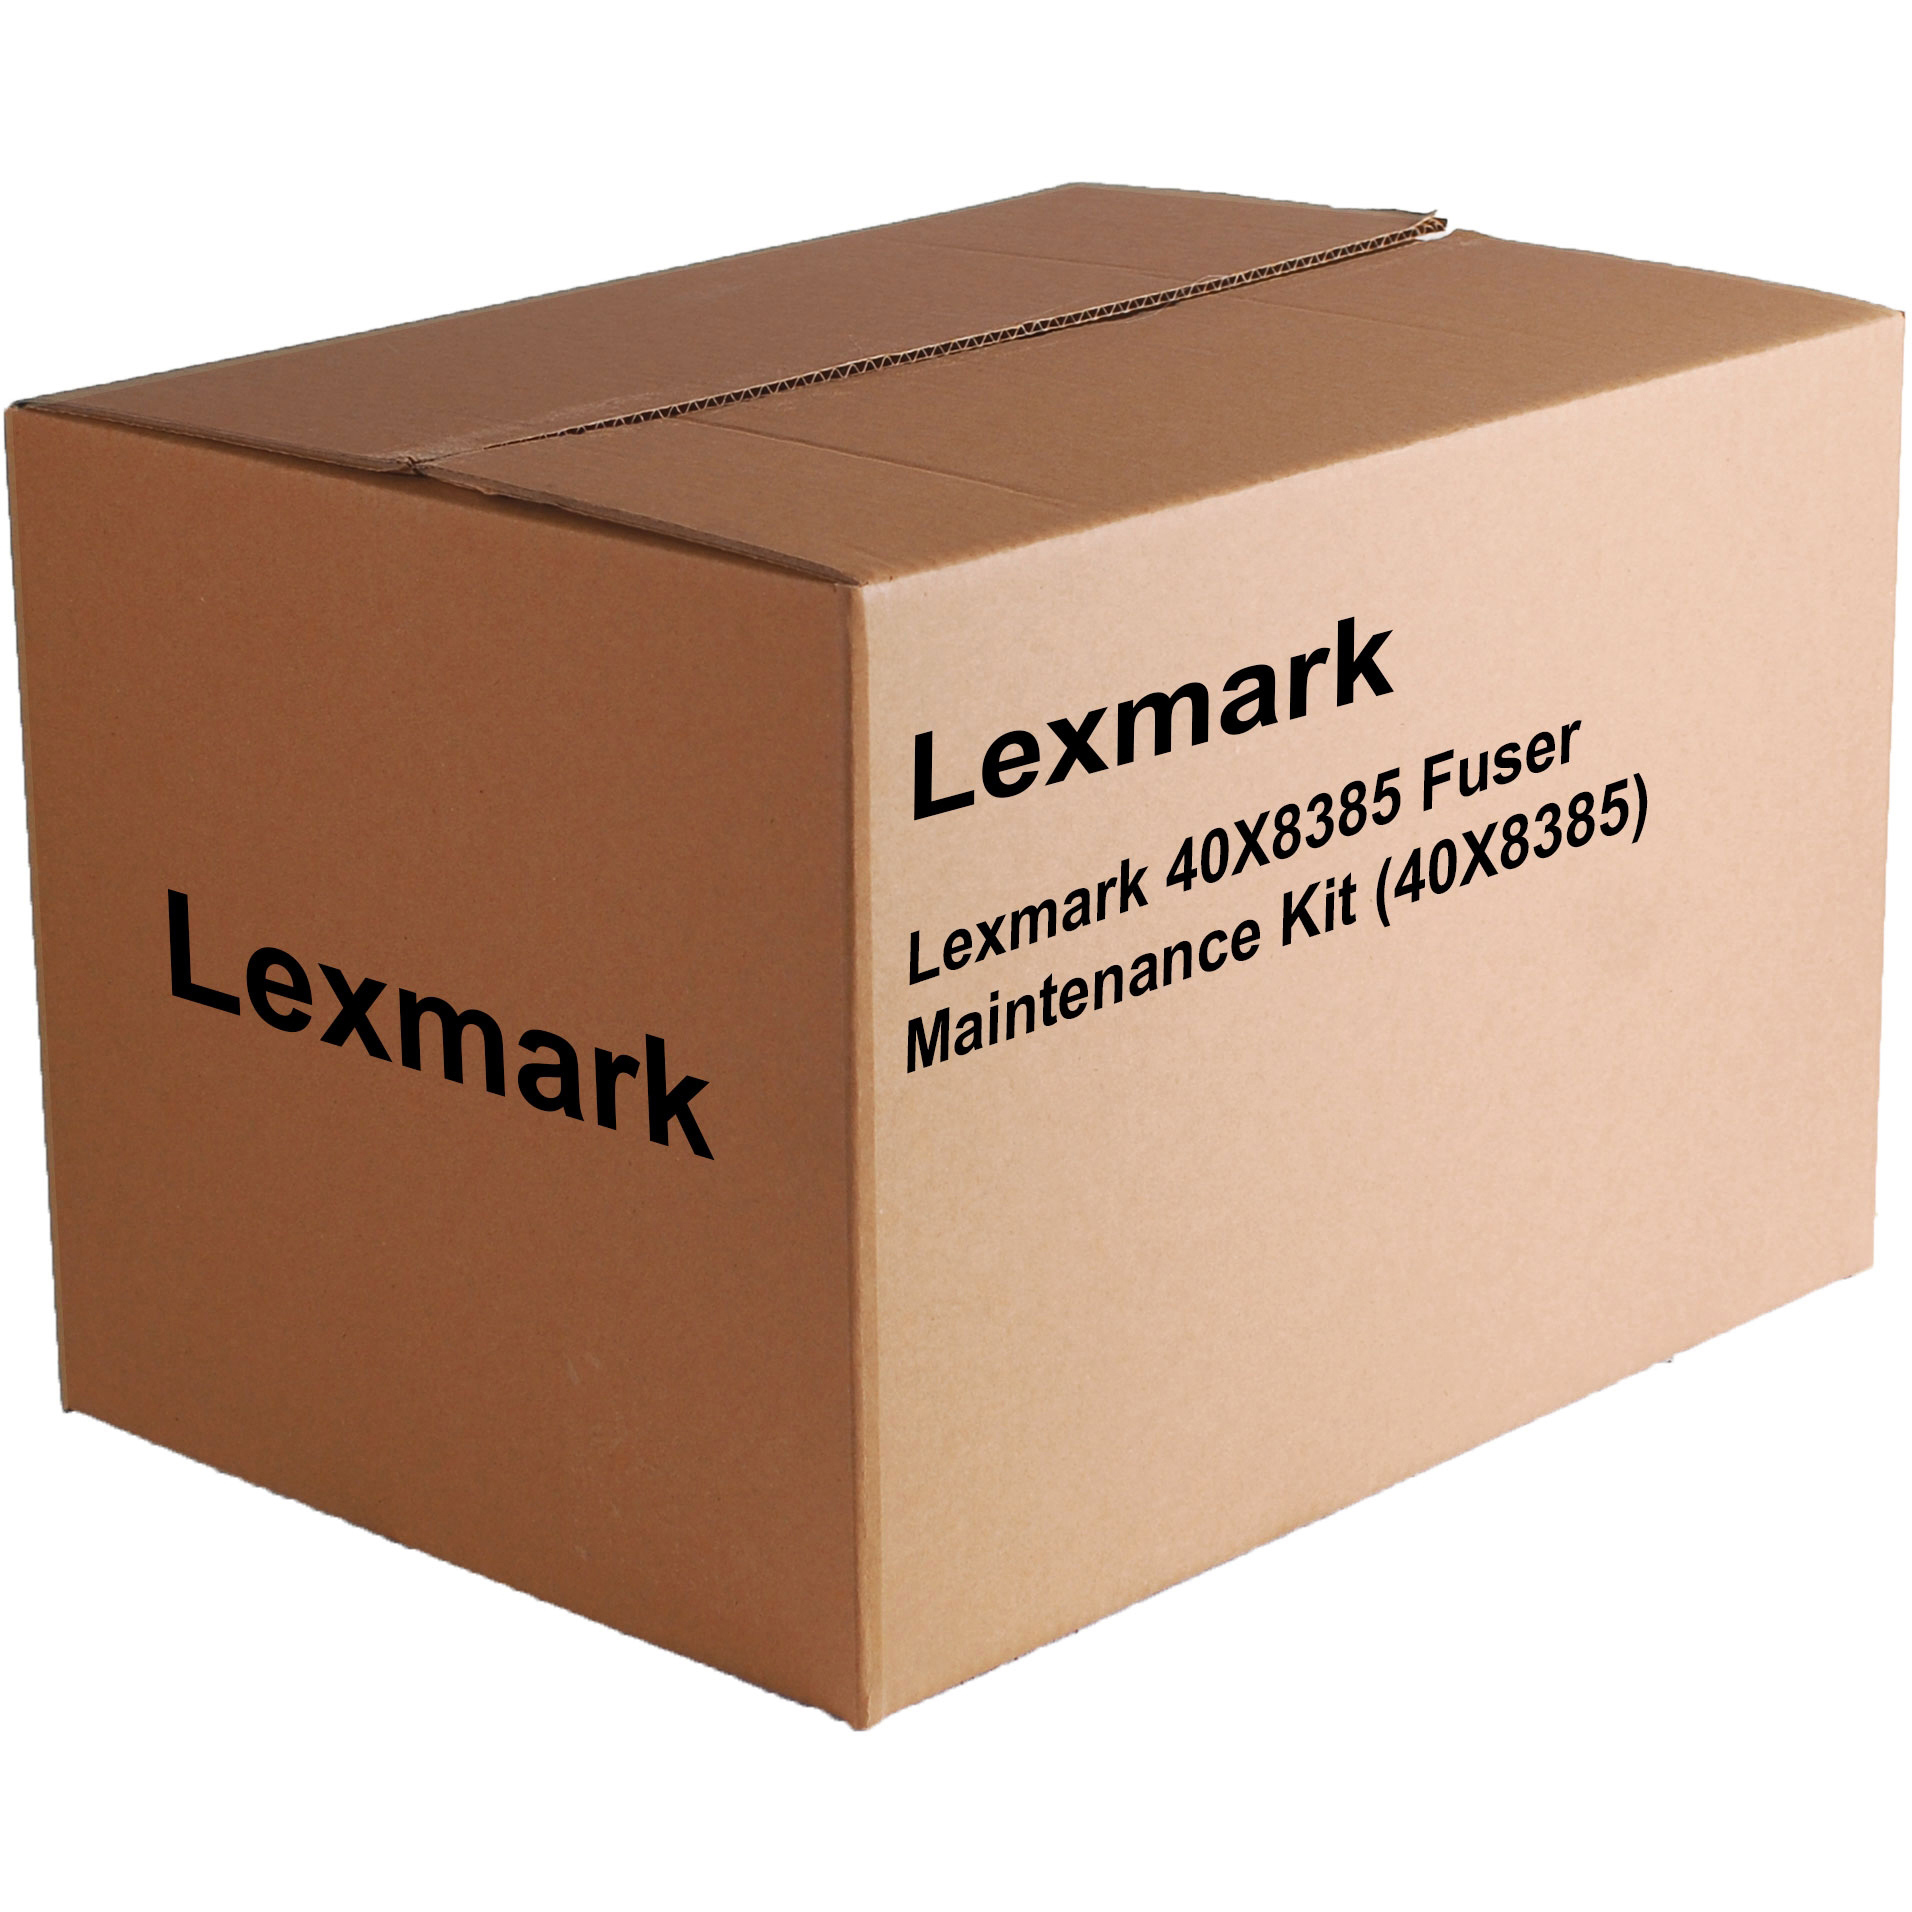 Original Lexmark 40X8385 Fuser Maintenance Kit (40X8385)